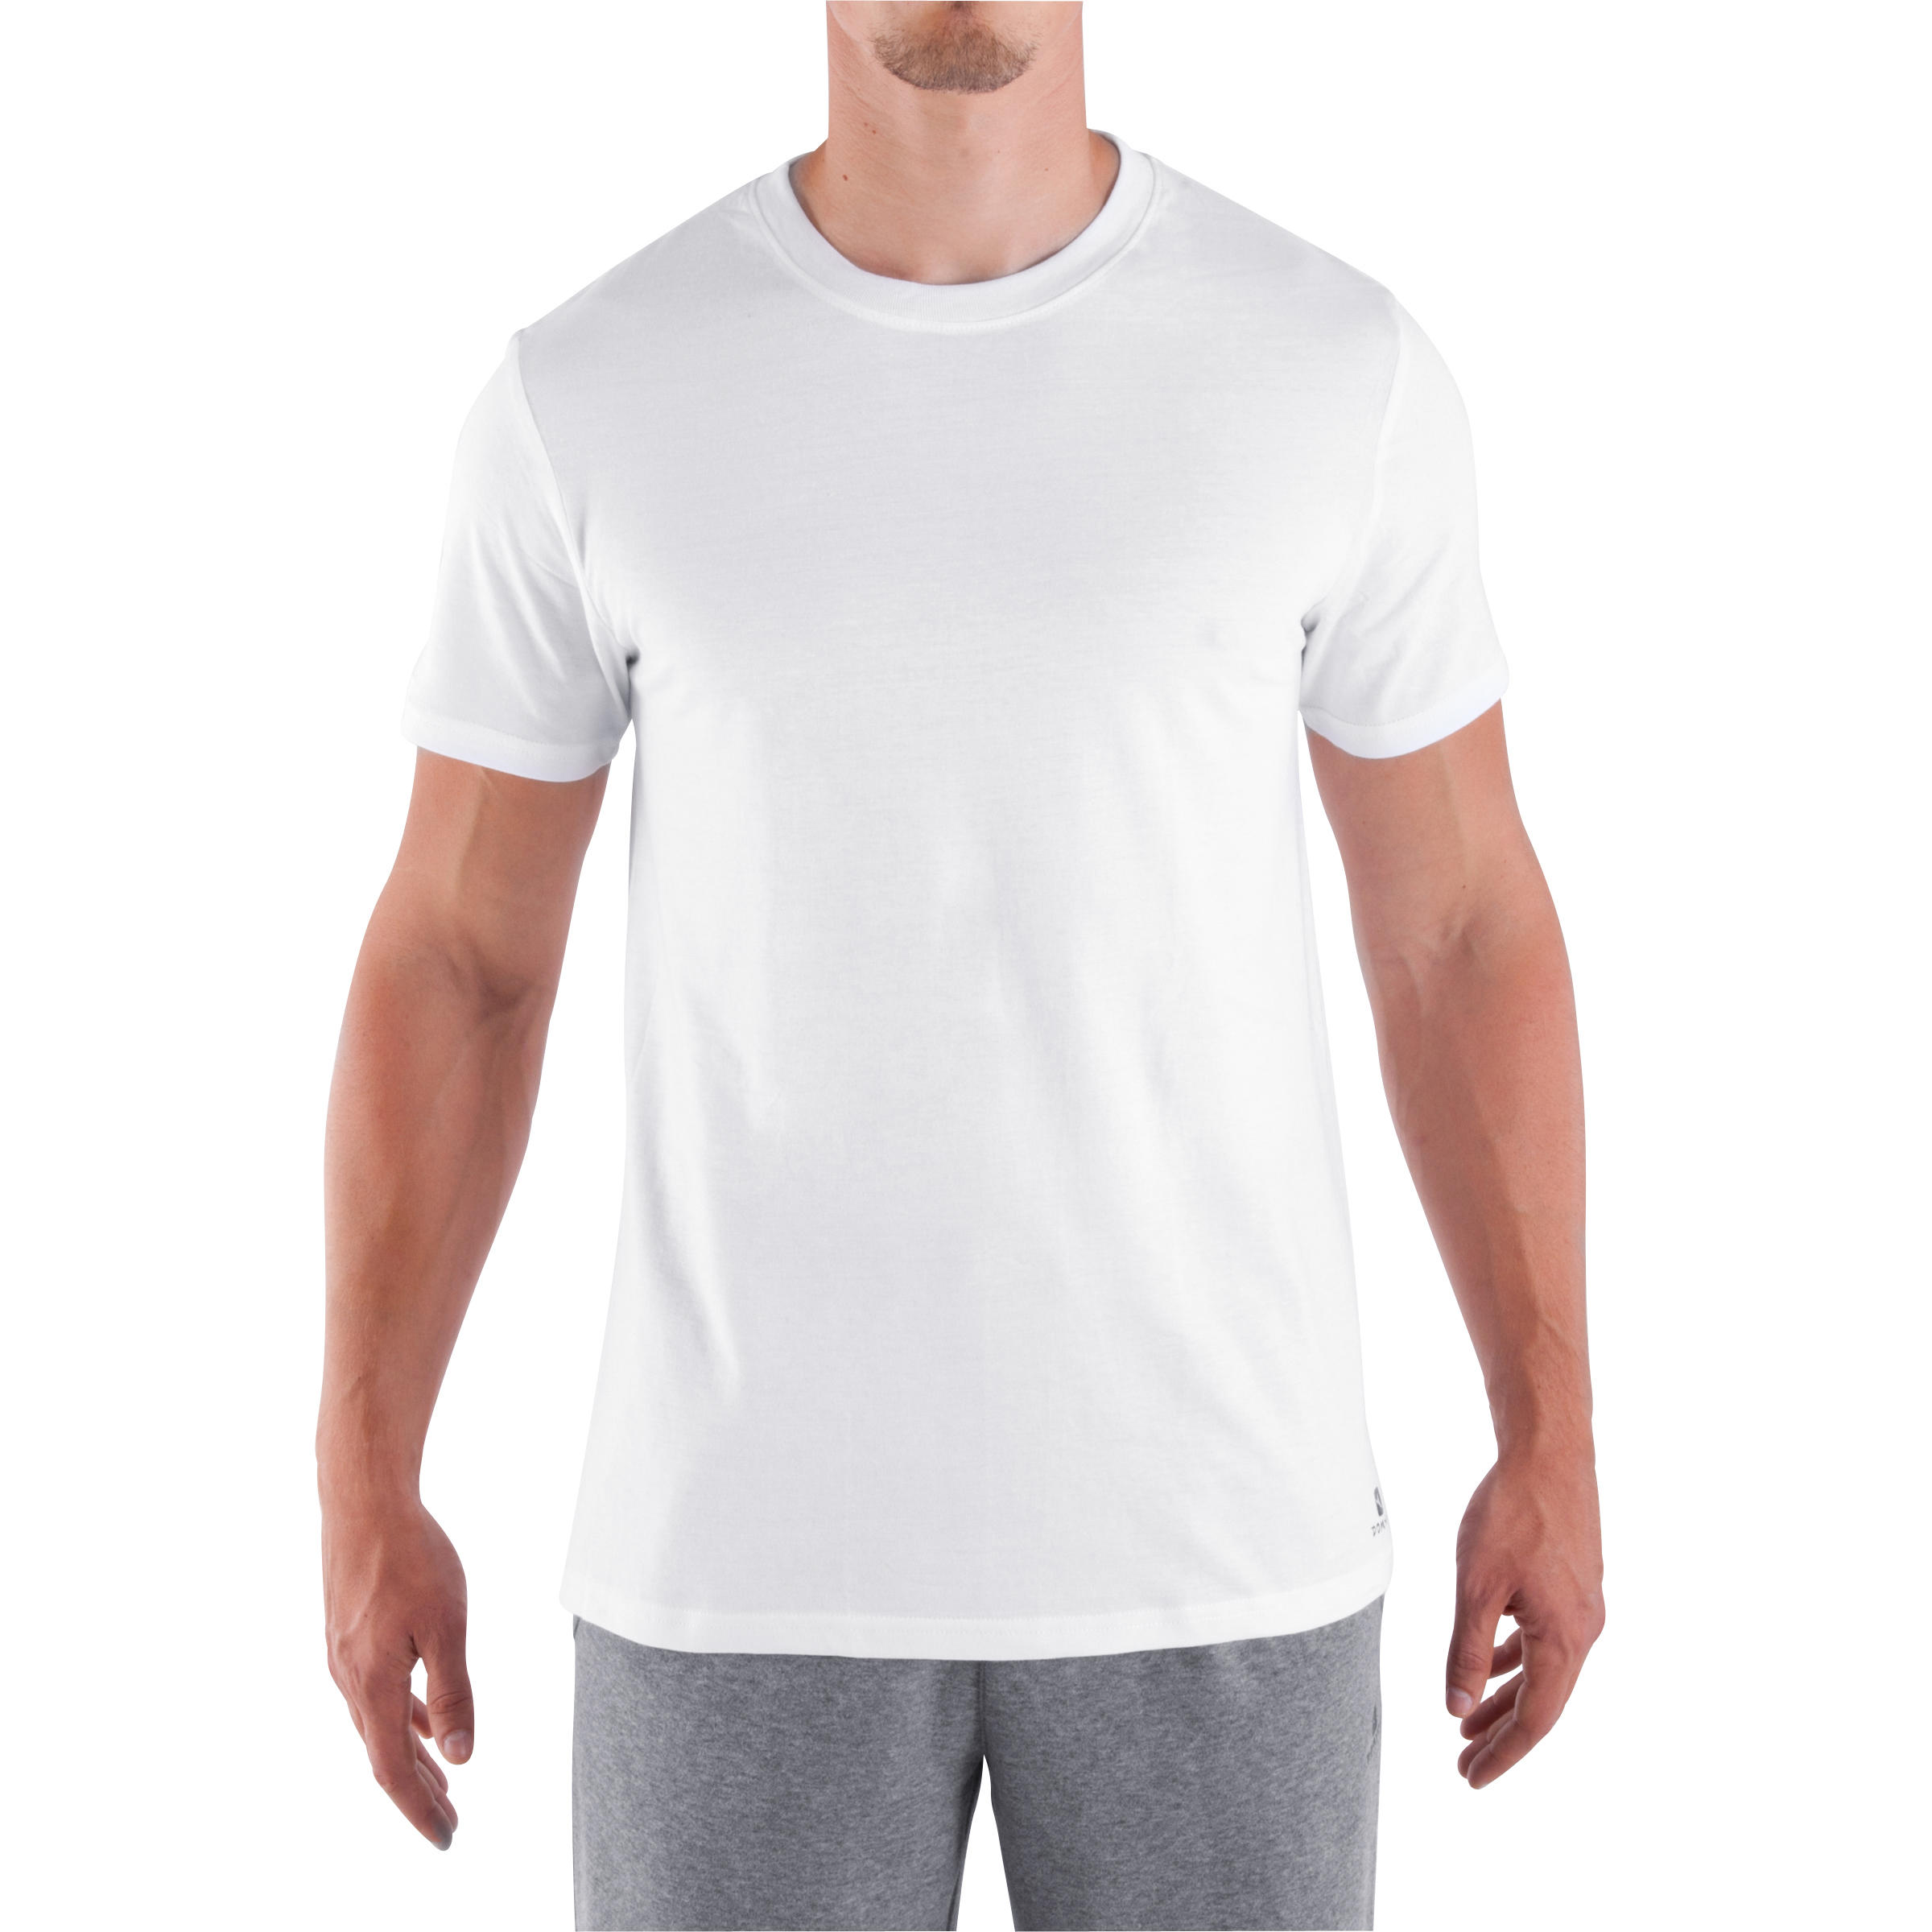 decathlon men's t shirts